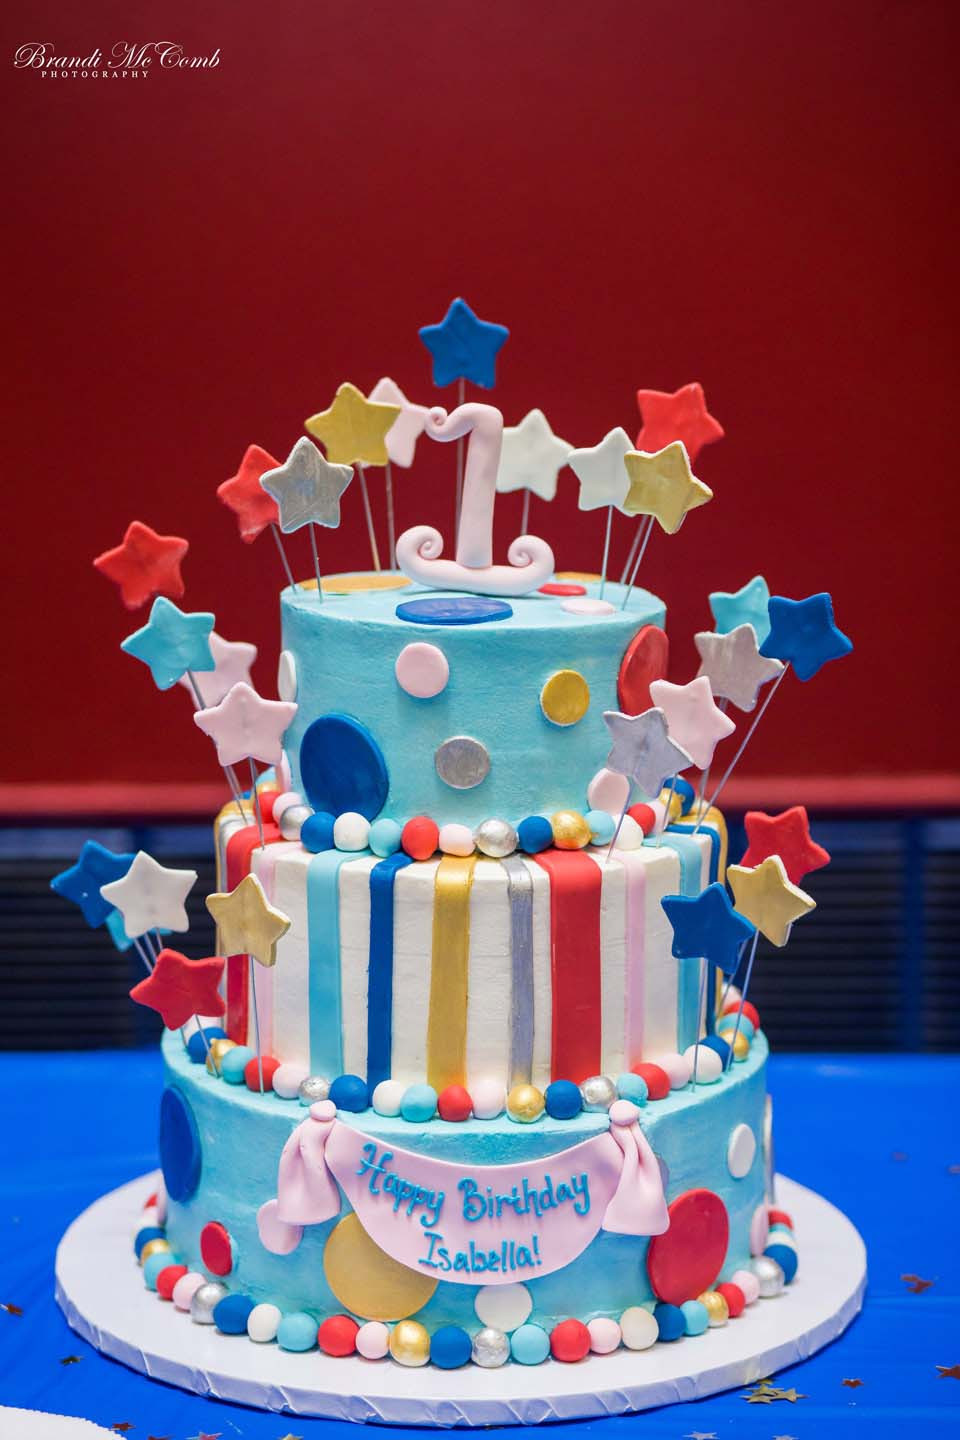 Personalized Birthday Cakes
 Birthday Cakes Celebrity Café and Bakery